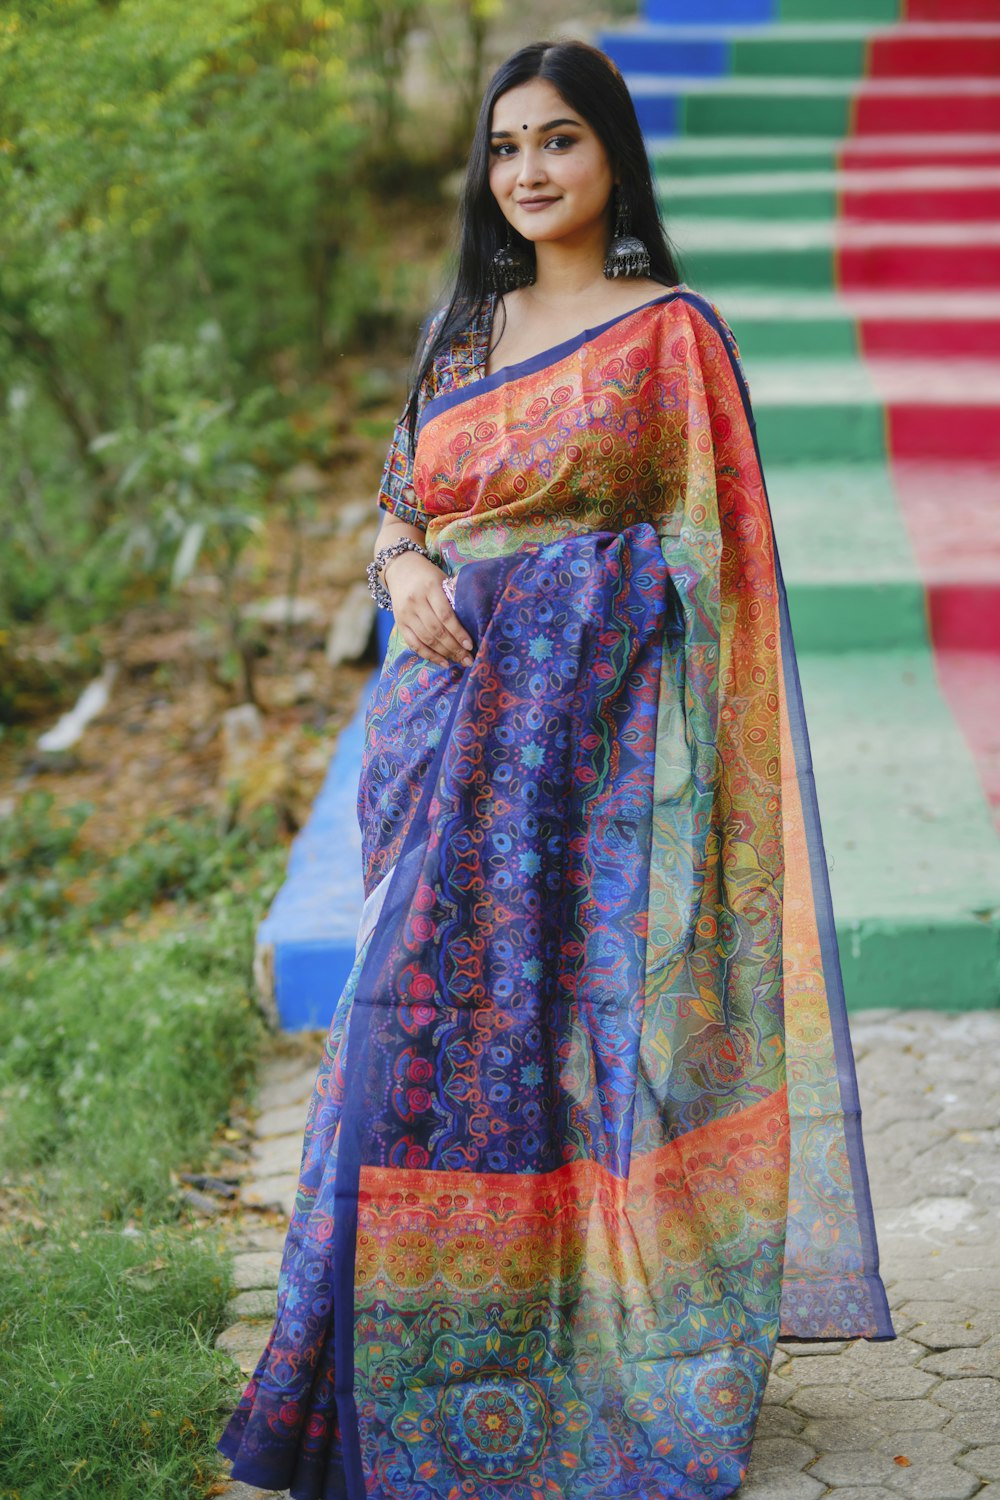 a beautiful woman in a colorful sari